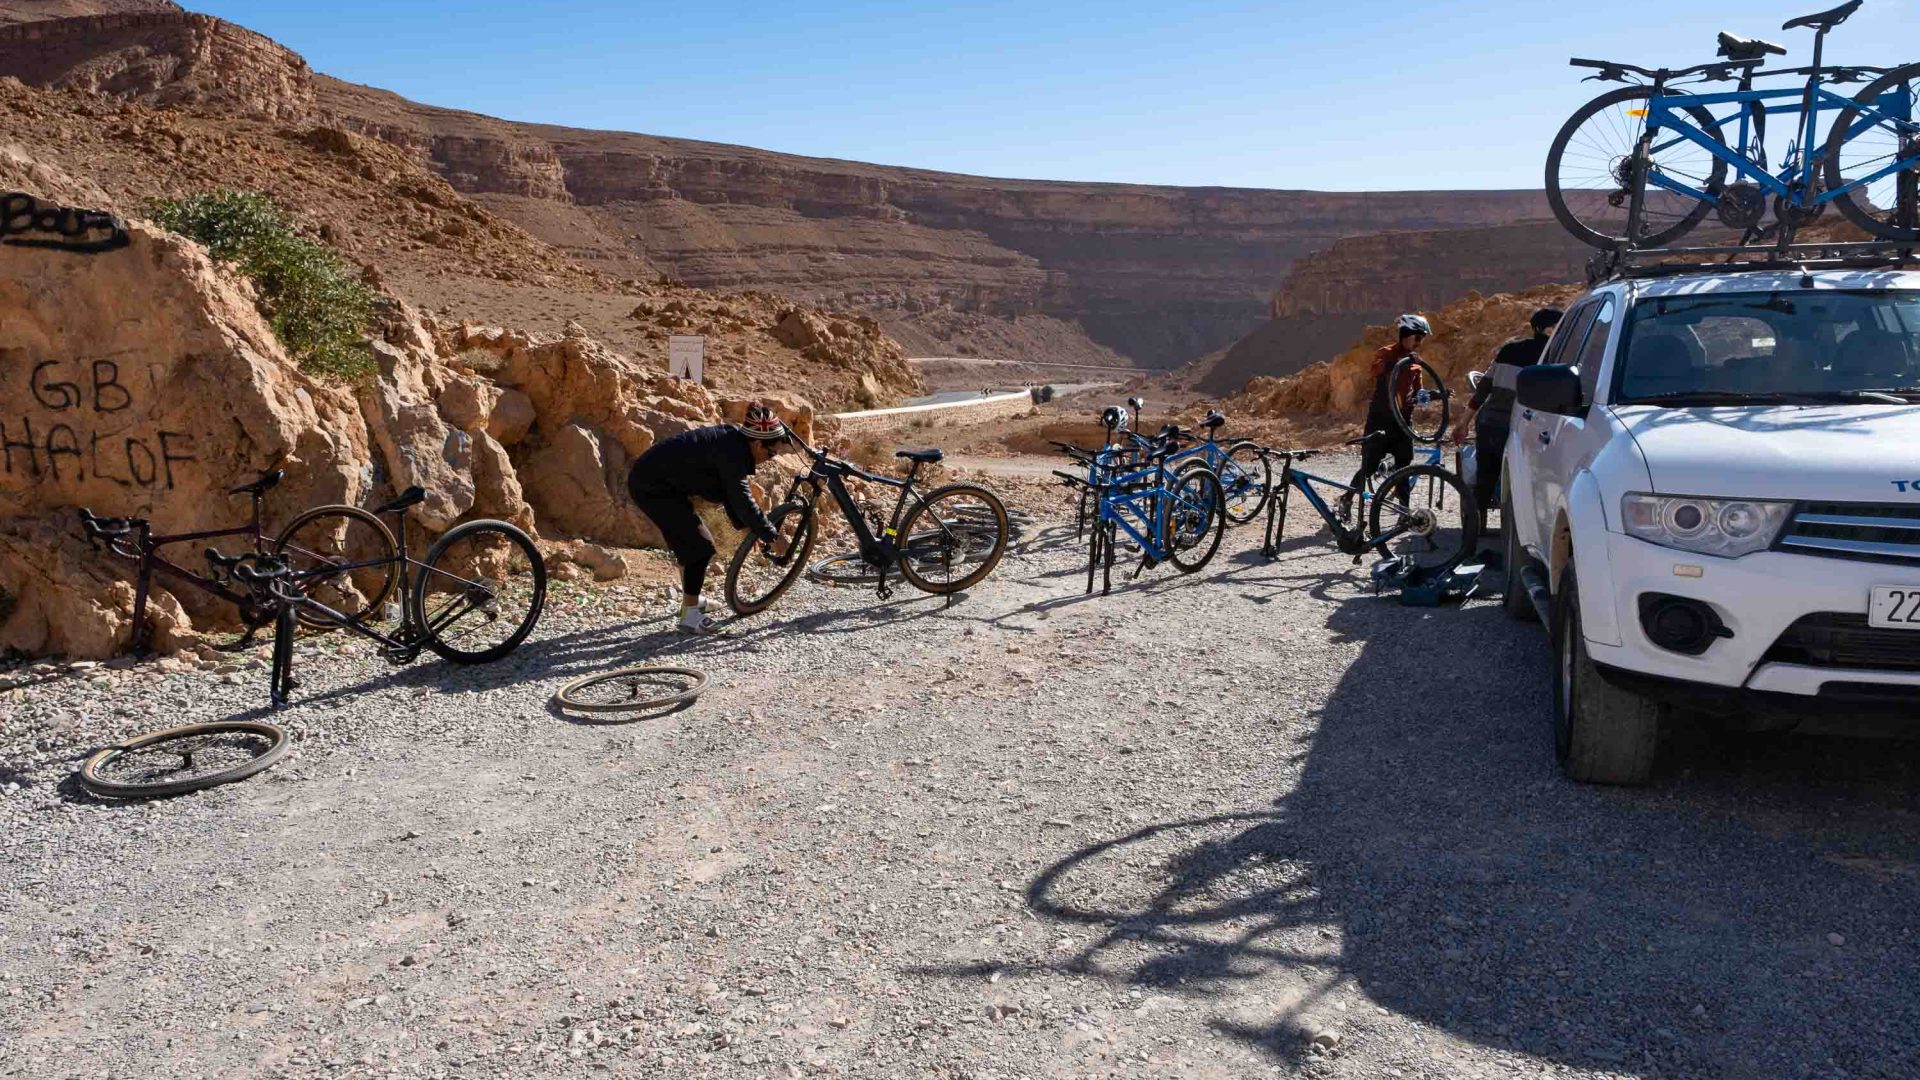 A group checks over their bikes.